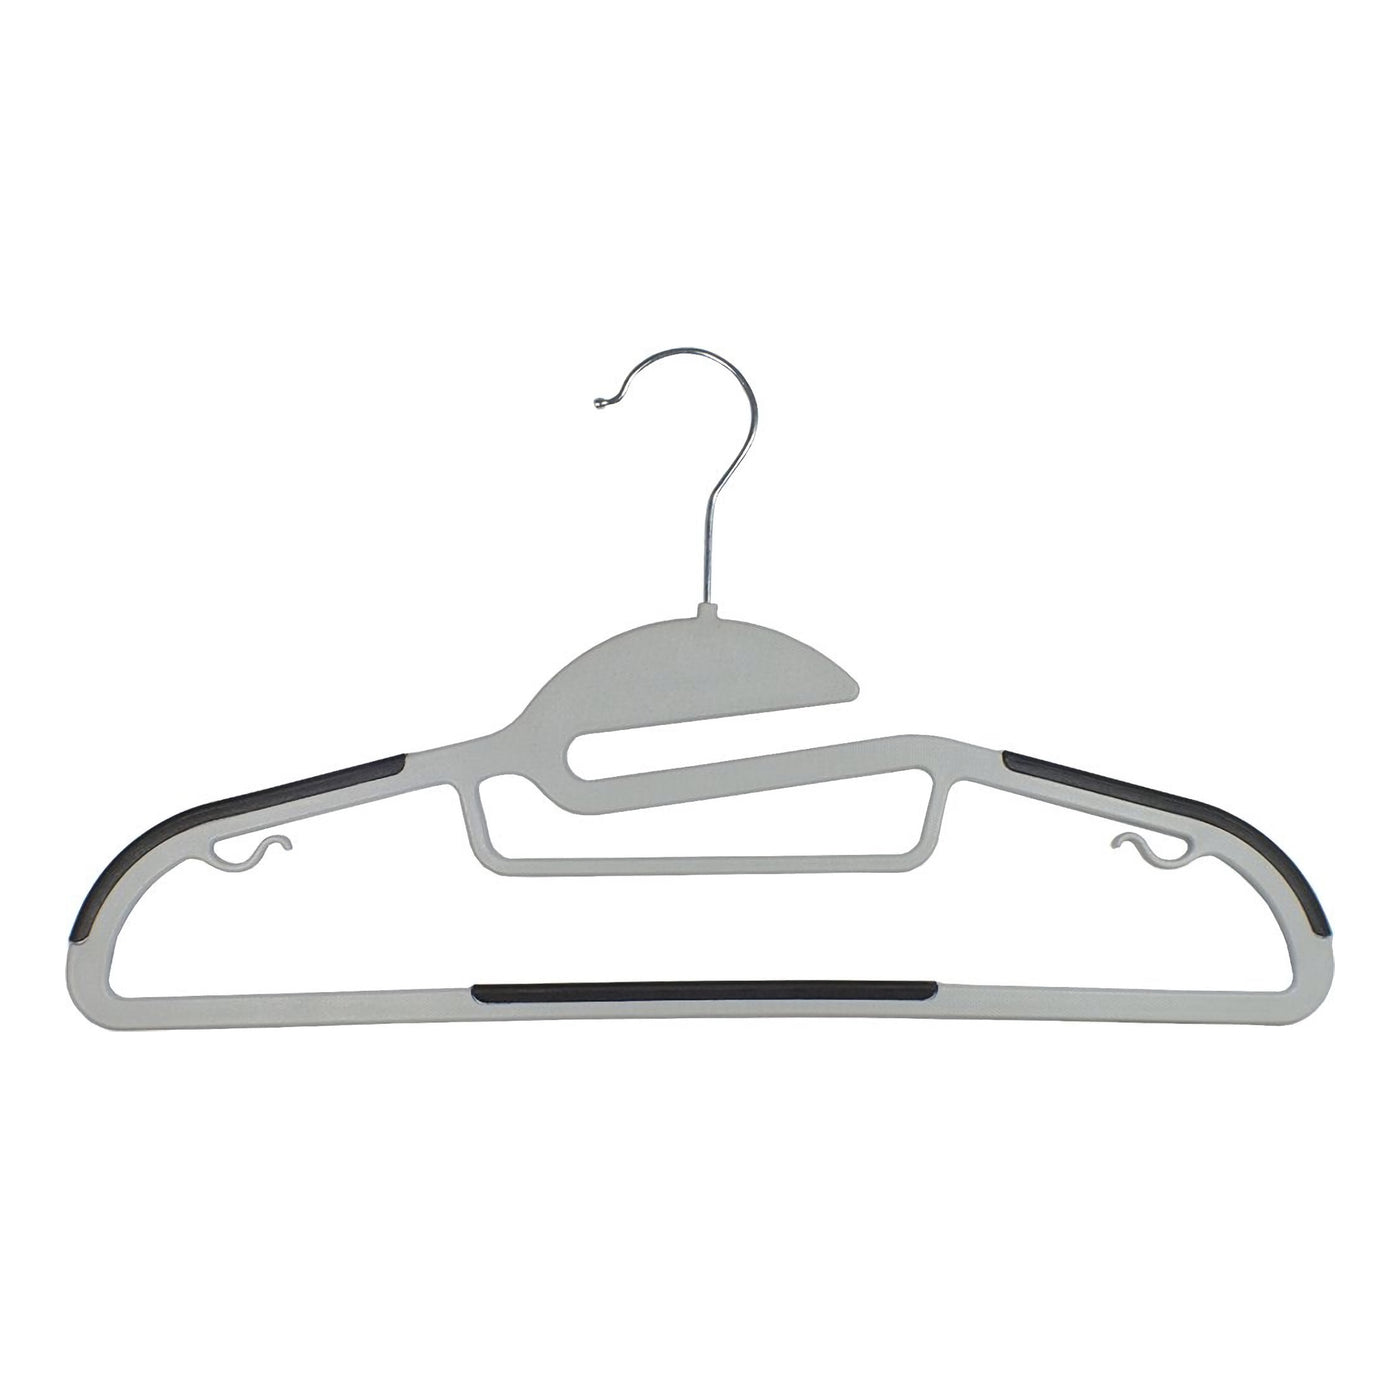 Gray/Black Slim Plastic Hangers with Anti-Slip Rubber Grips